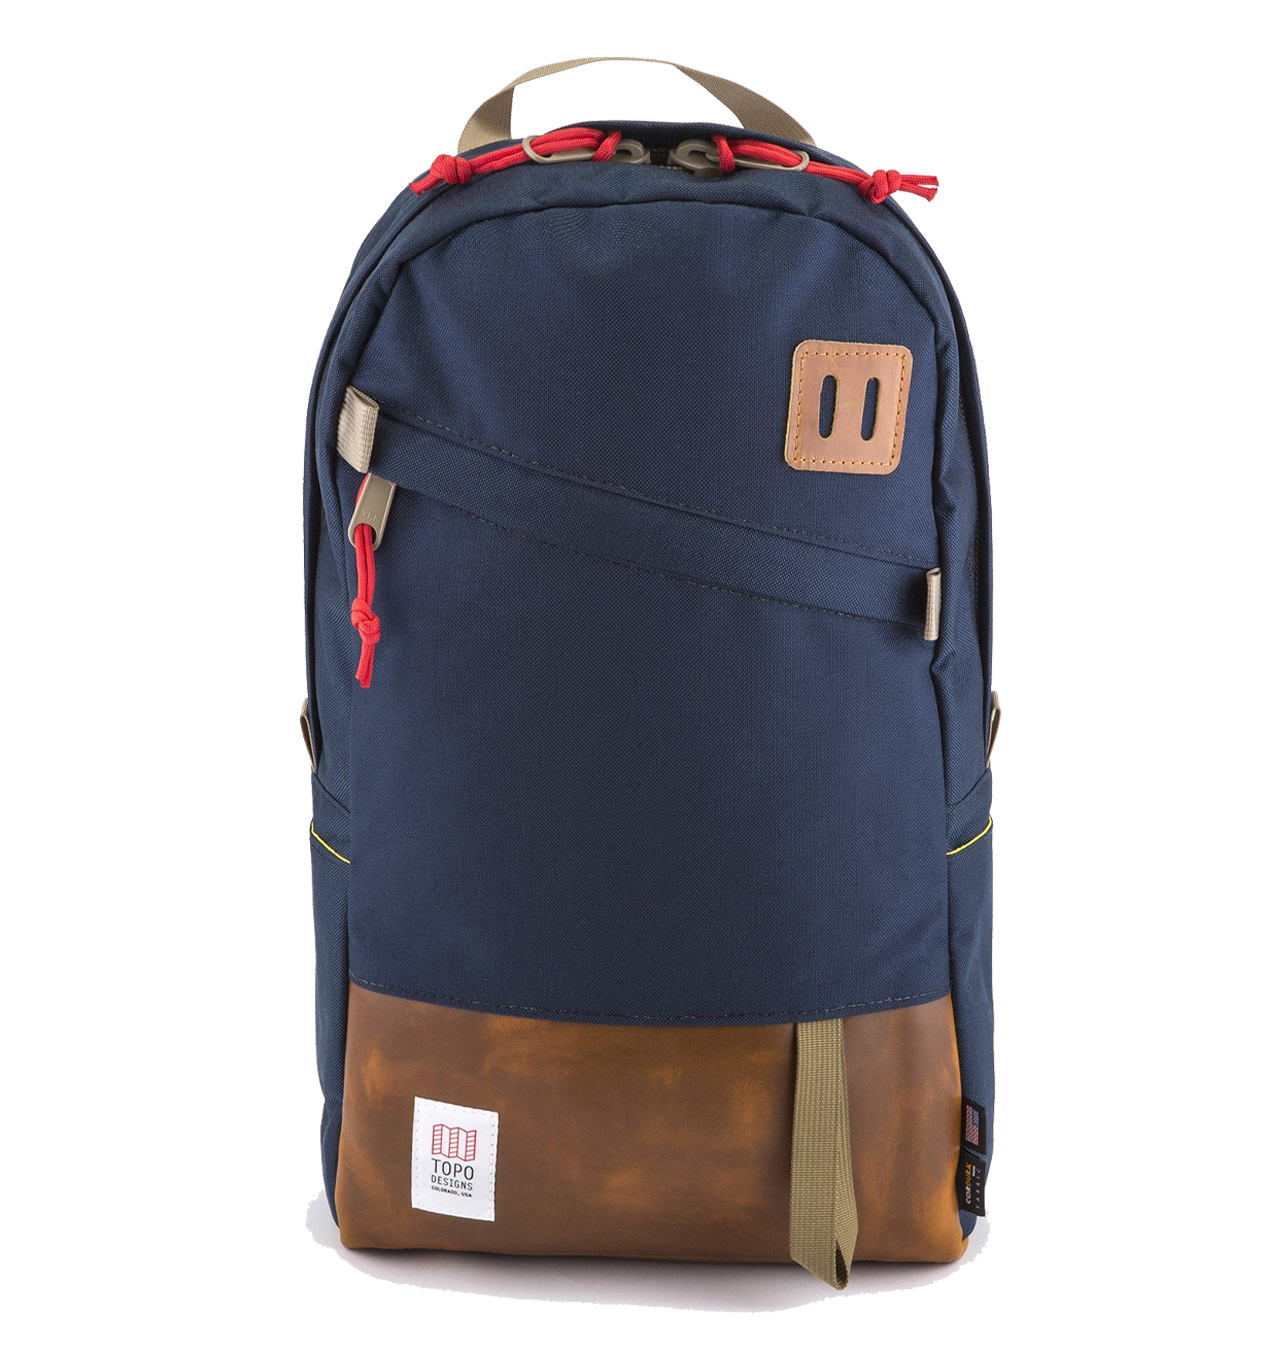 TOPO Designs - Daypack Heritage Corduva - Navy / Dark Brown Leather